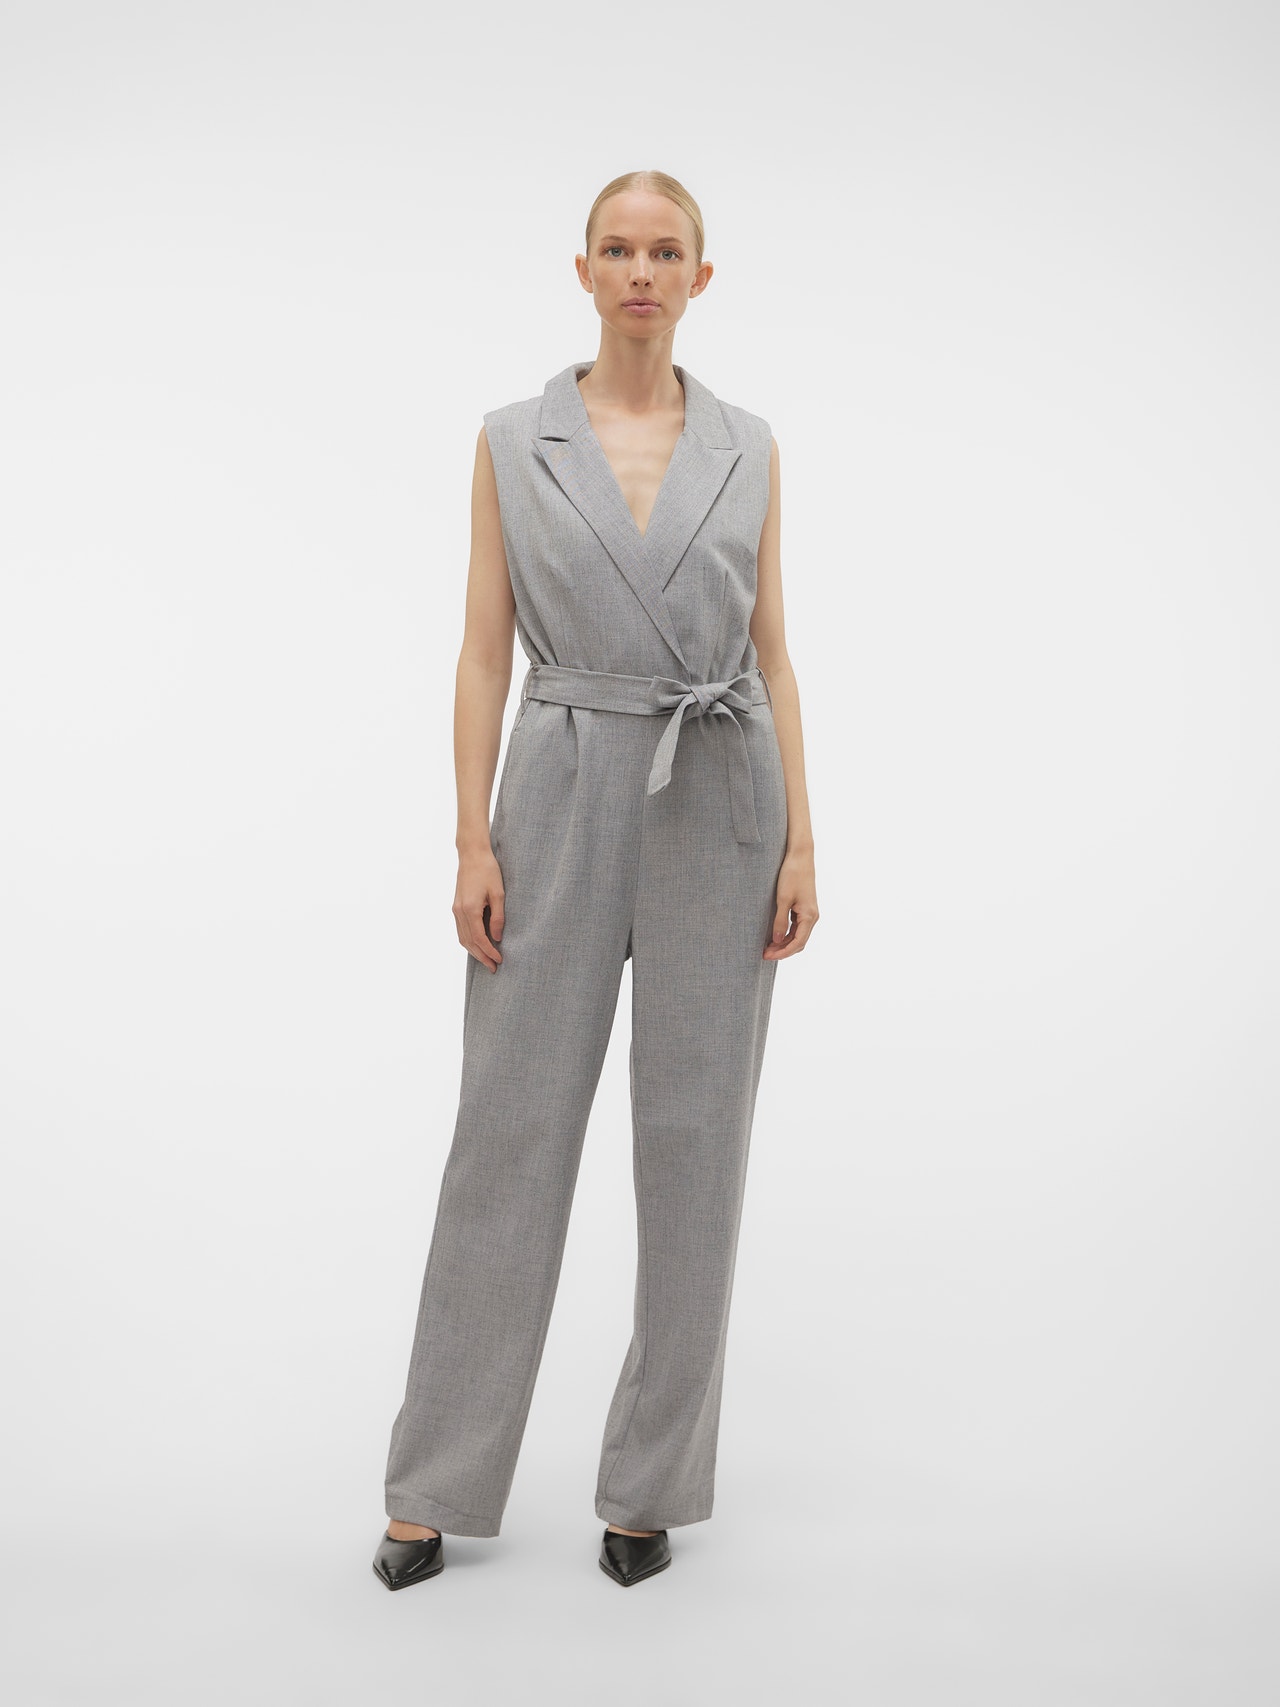 Vero Moda VMYOLANDA Jumpsuit -Medium Grey Melange - 10301741